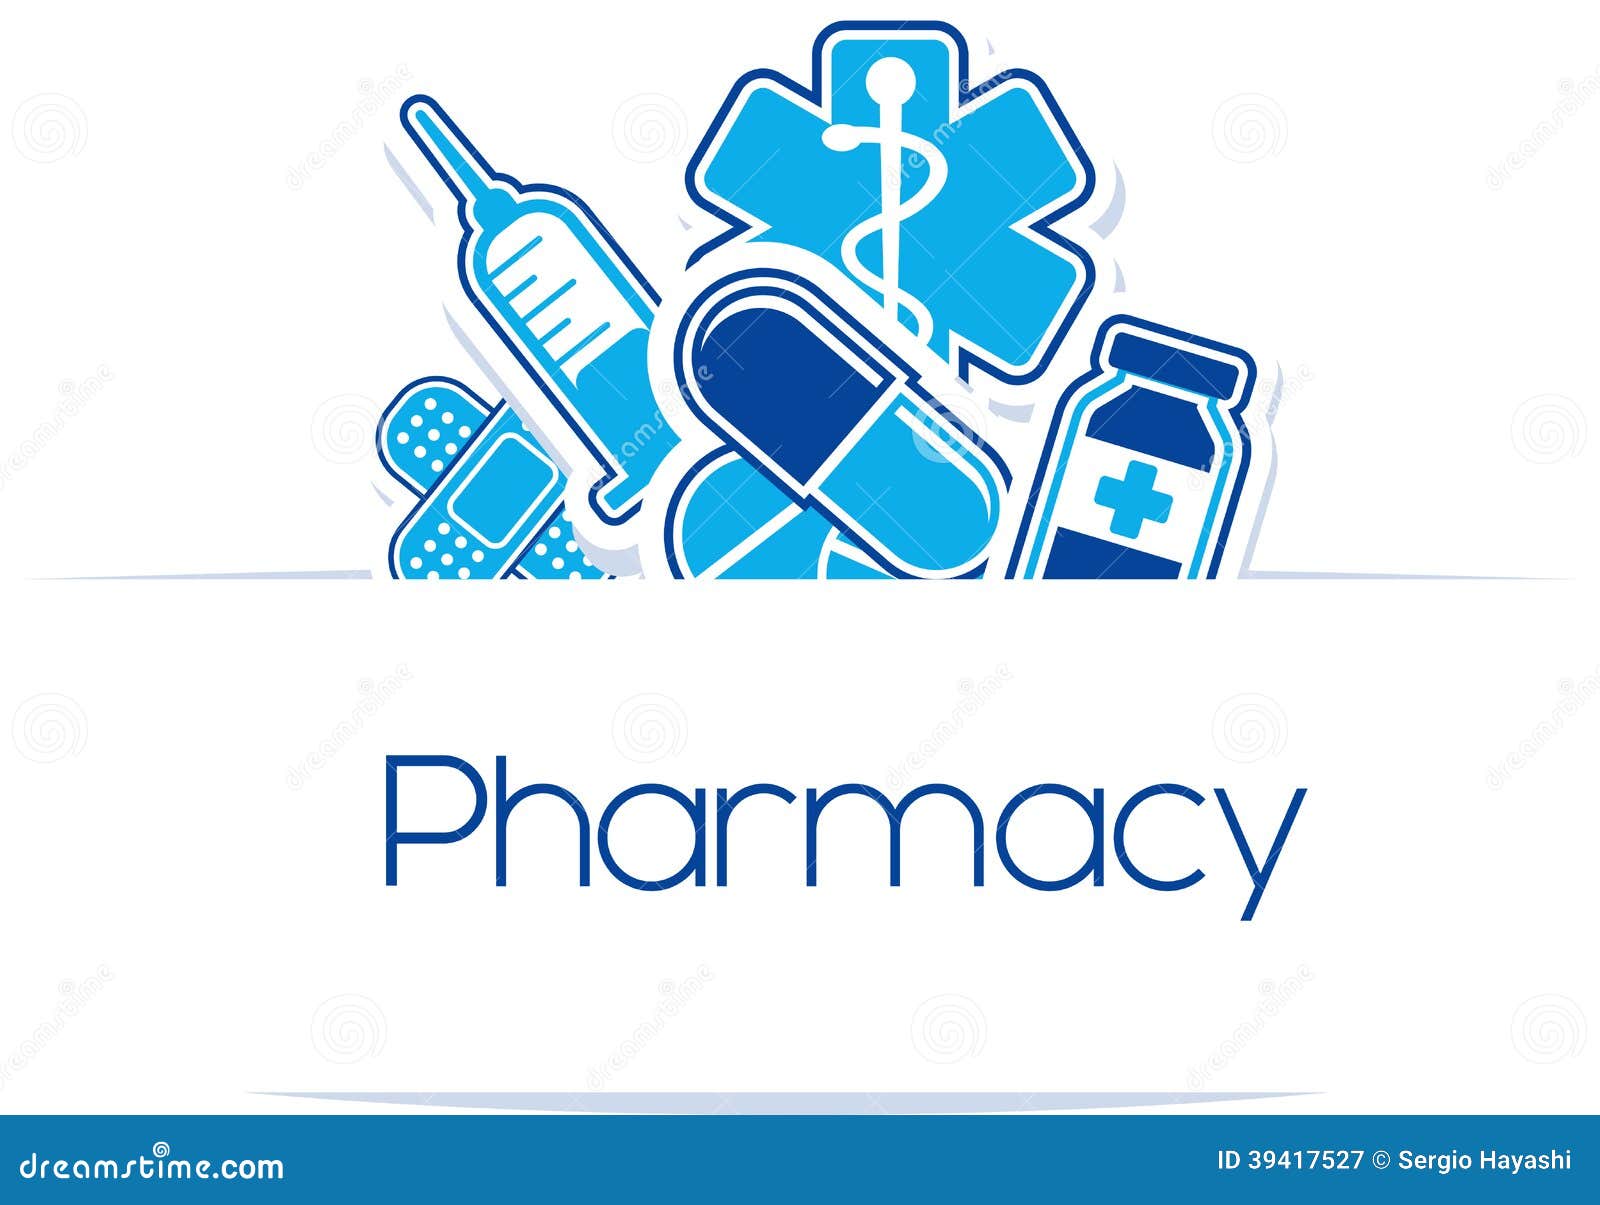 clip art of a pharmacy - photo #46